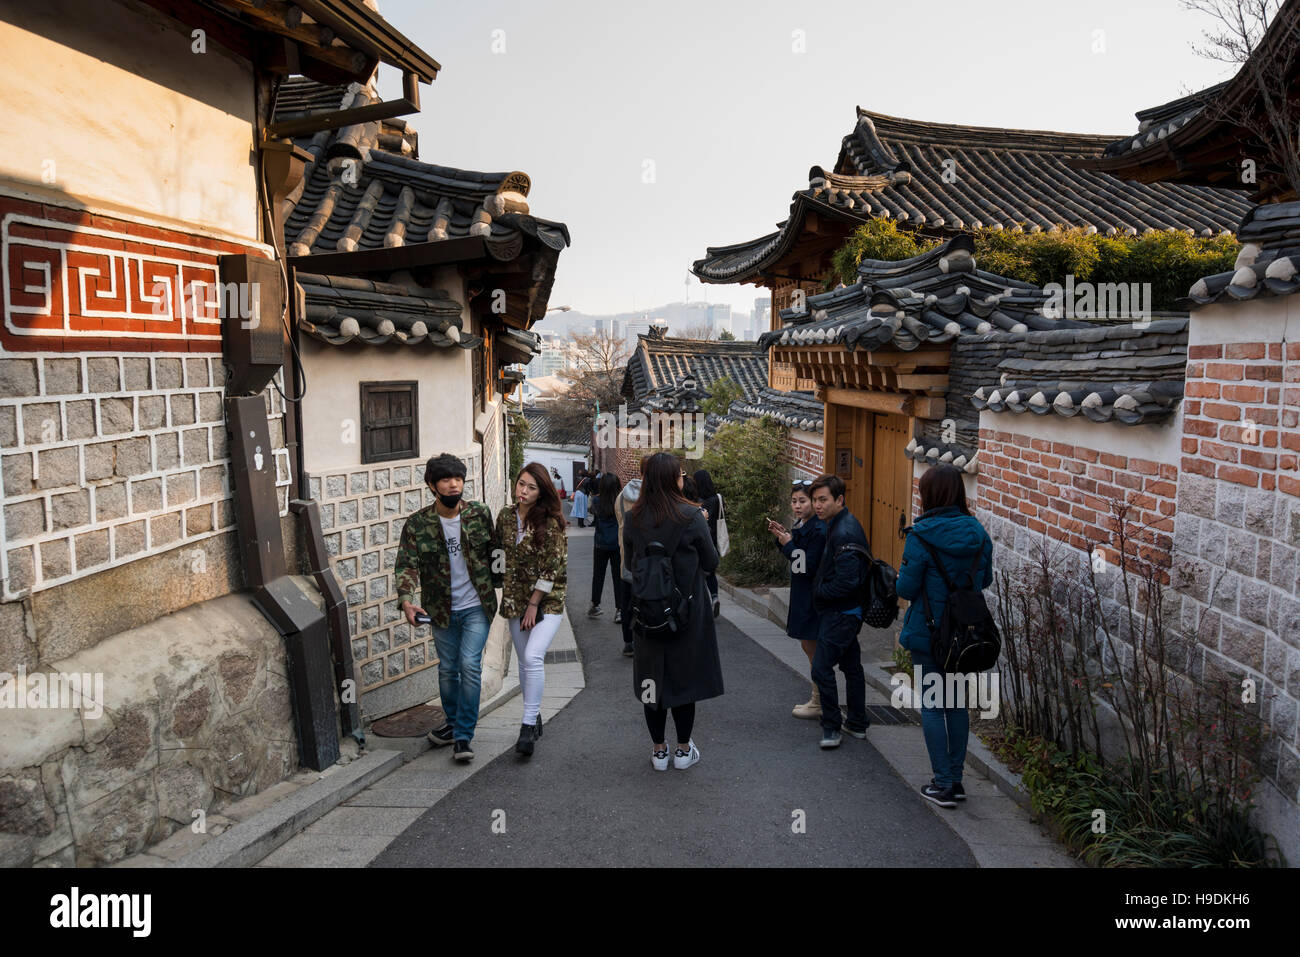 Casas coreanas fotografías e imágenes de alta resolución - Alamy